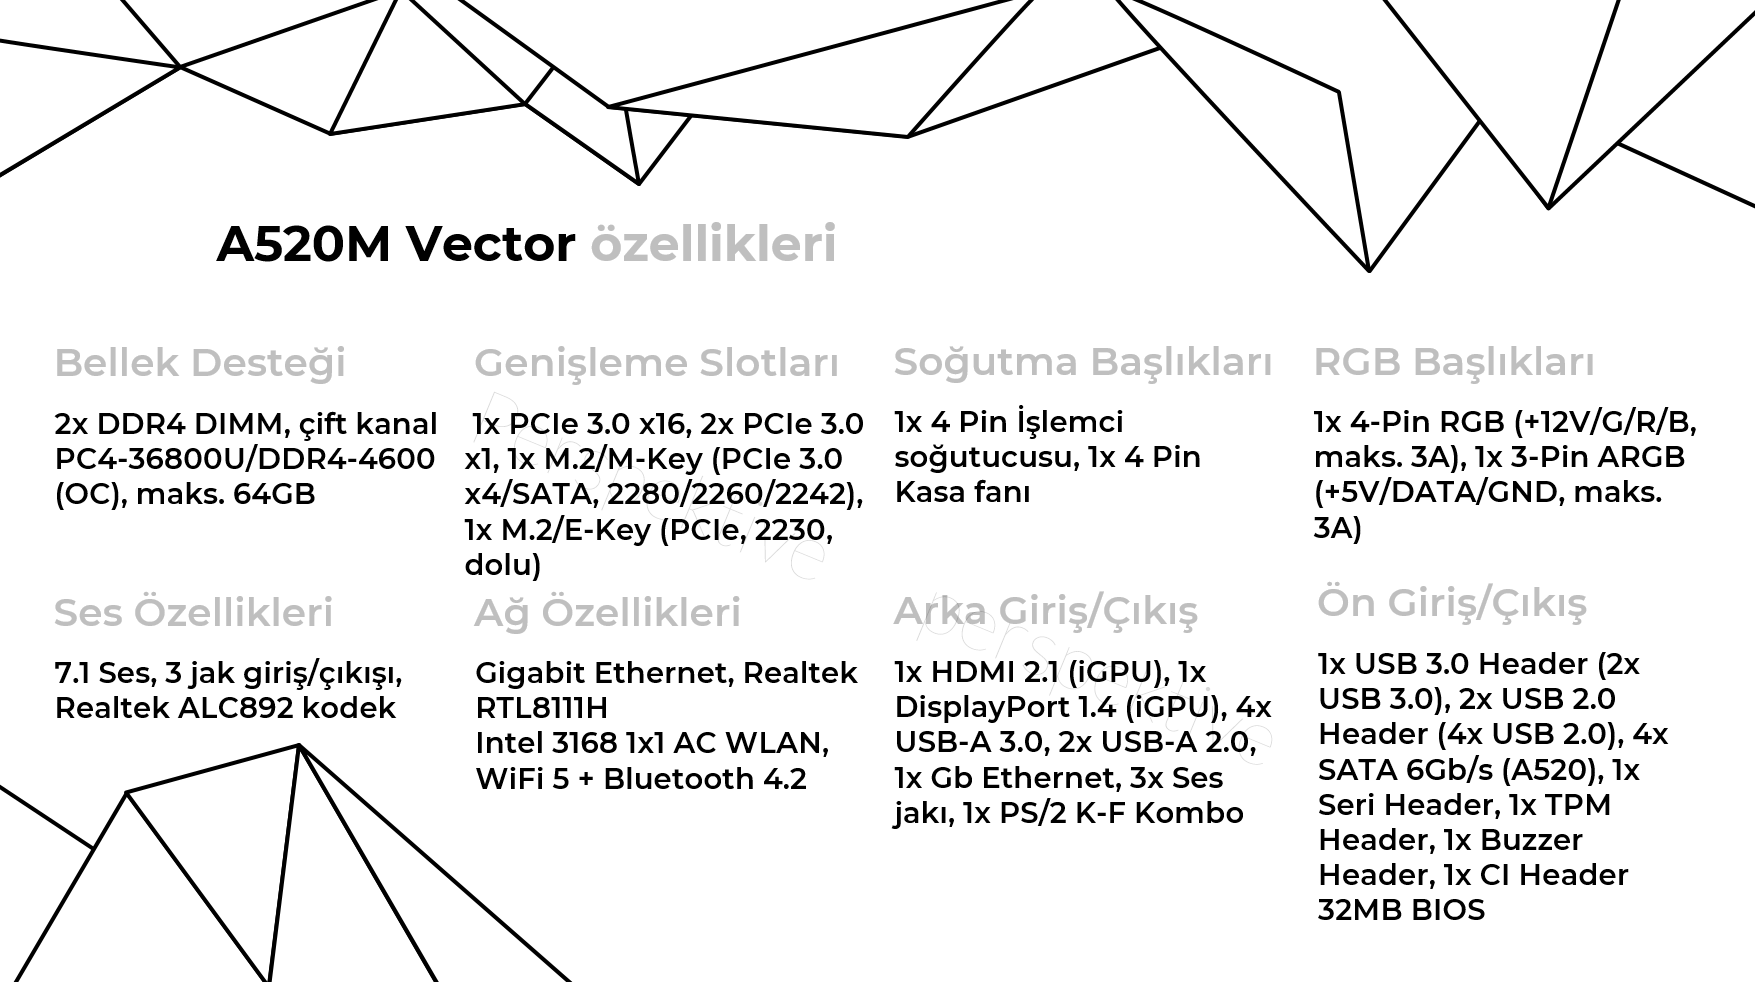 vector2.png